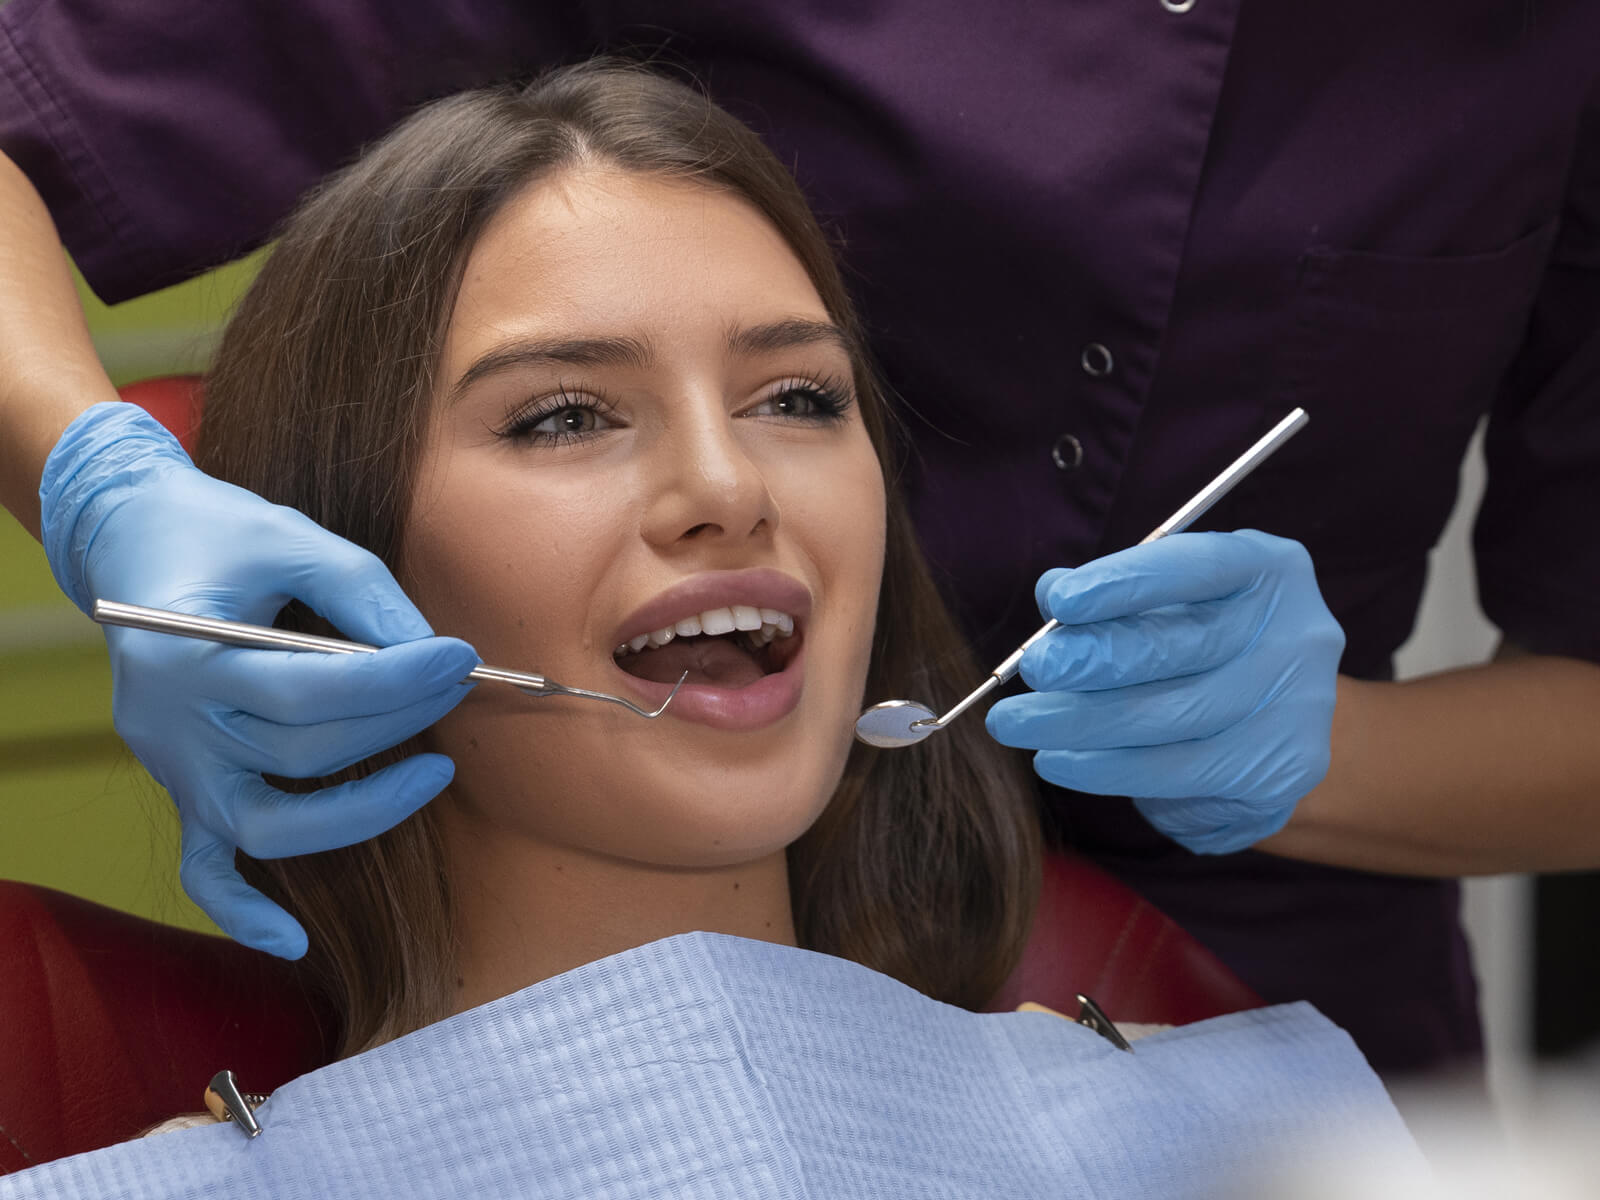 5 Benefits of Dental Implants Over Dentures